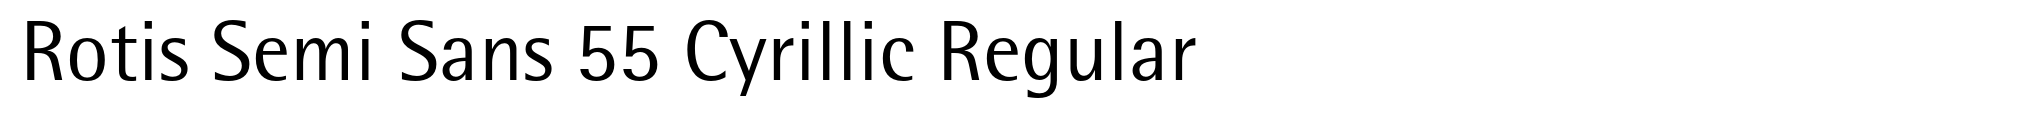 Rotis Semi Sans 55 Cyrillic Regular image